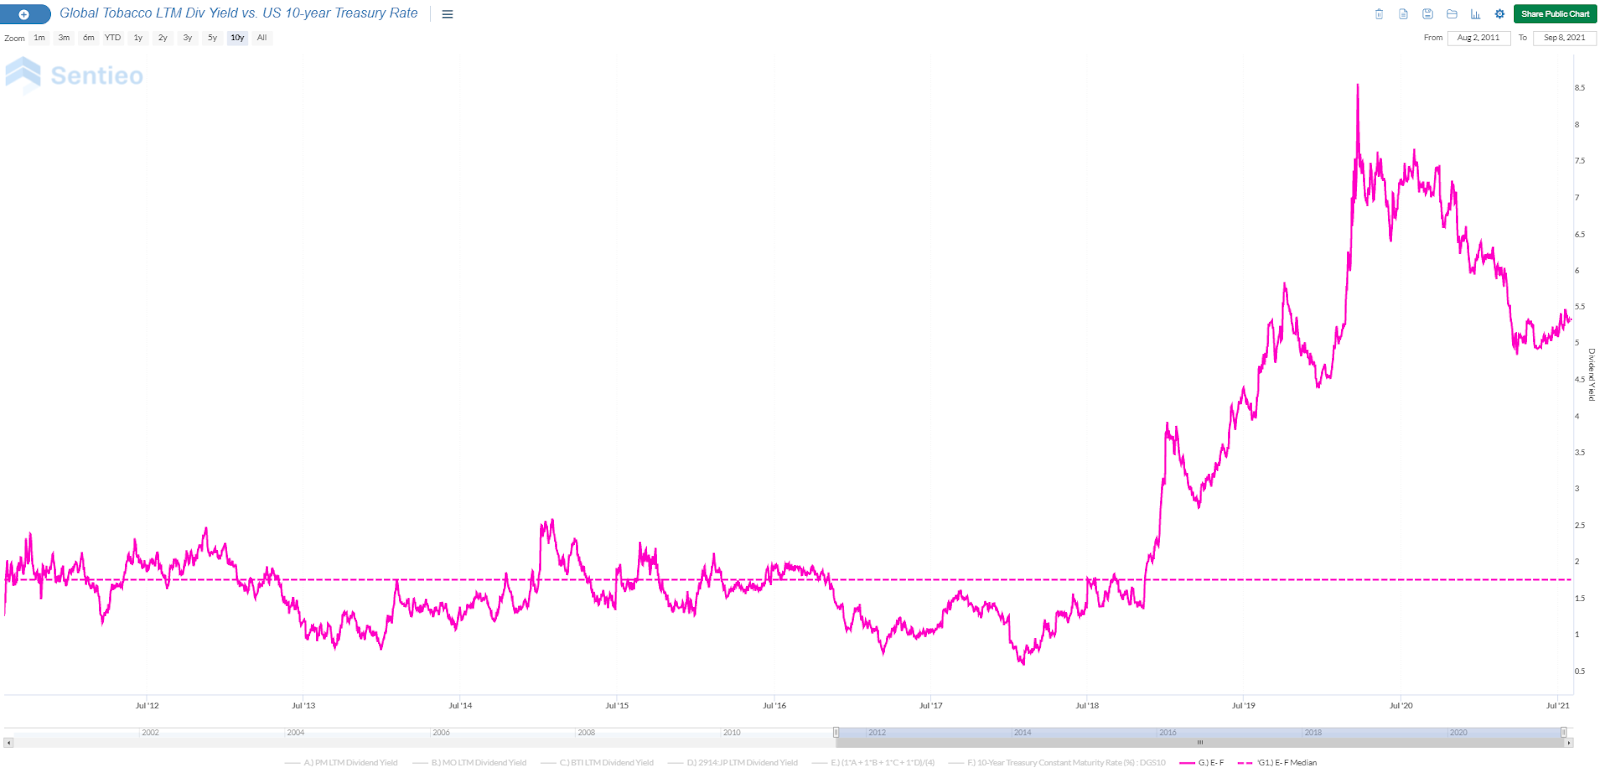 Global Tobacco LTM Div Yield vs. US 10-year Treasury Rate graph